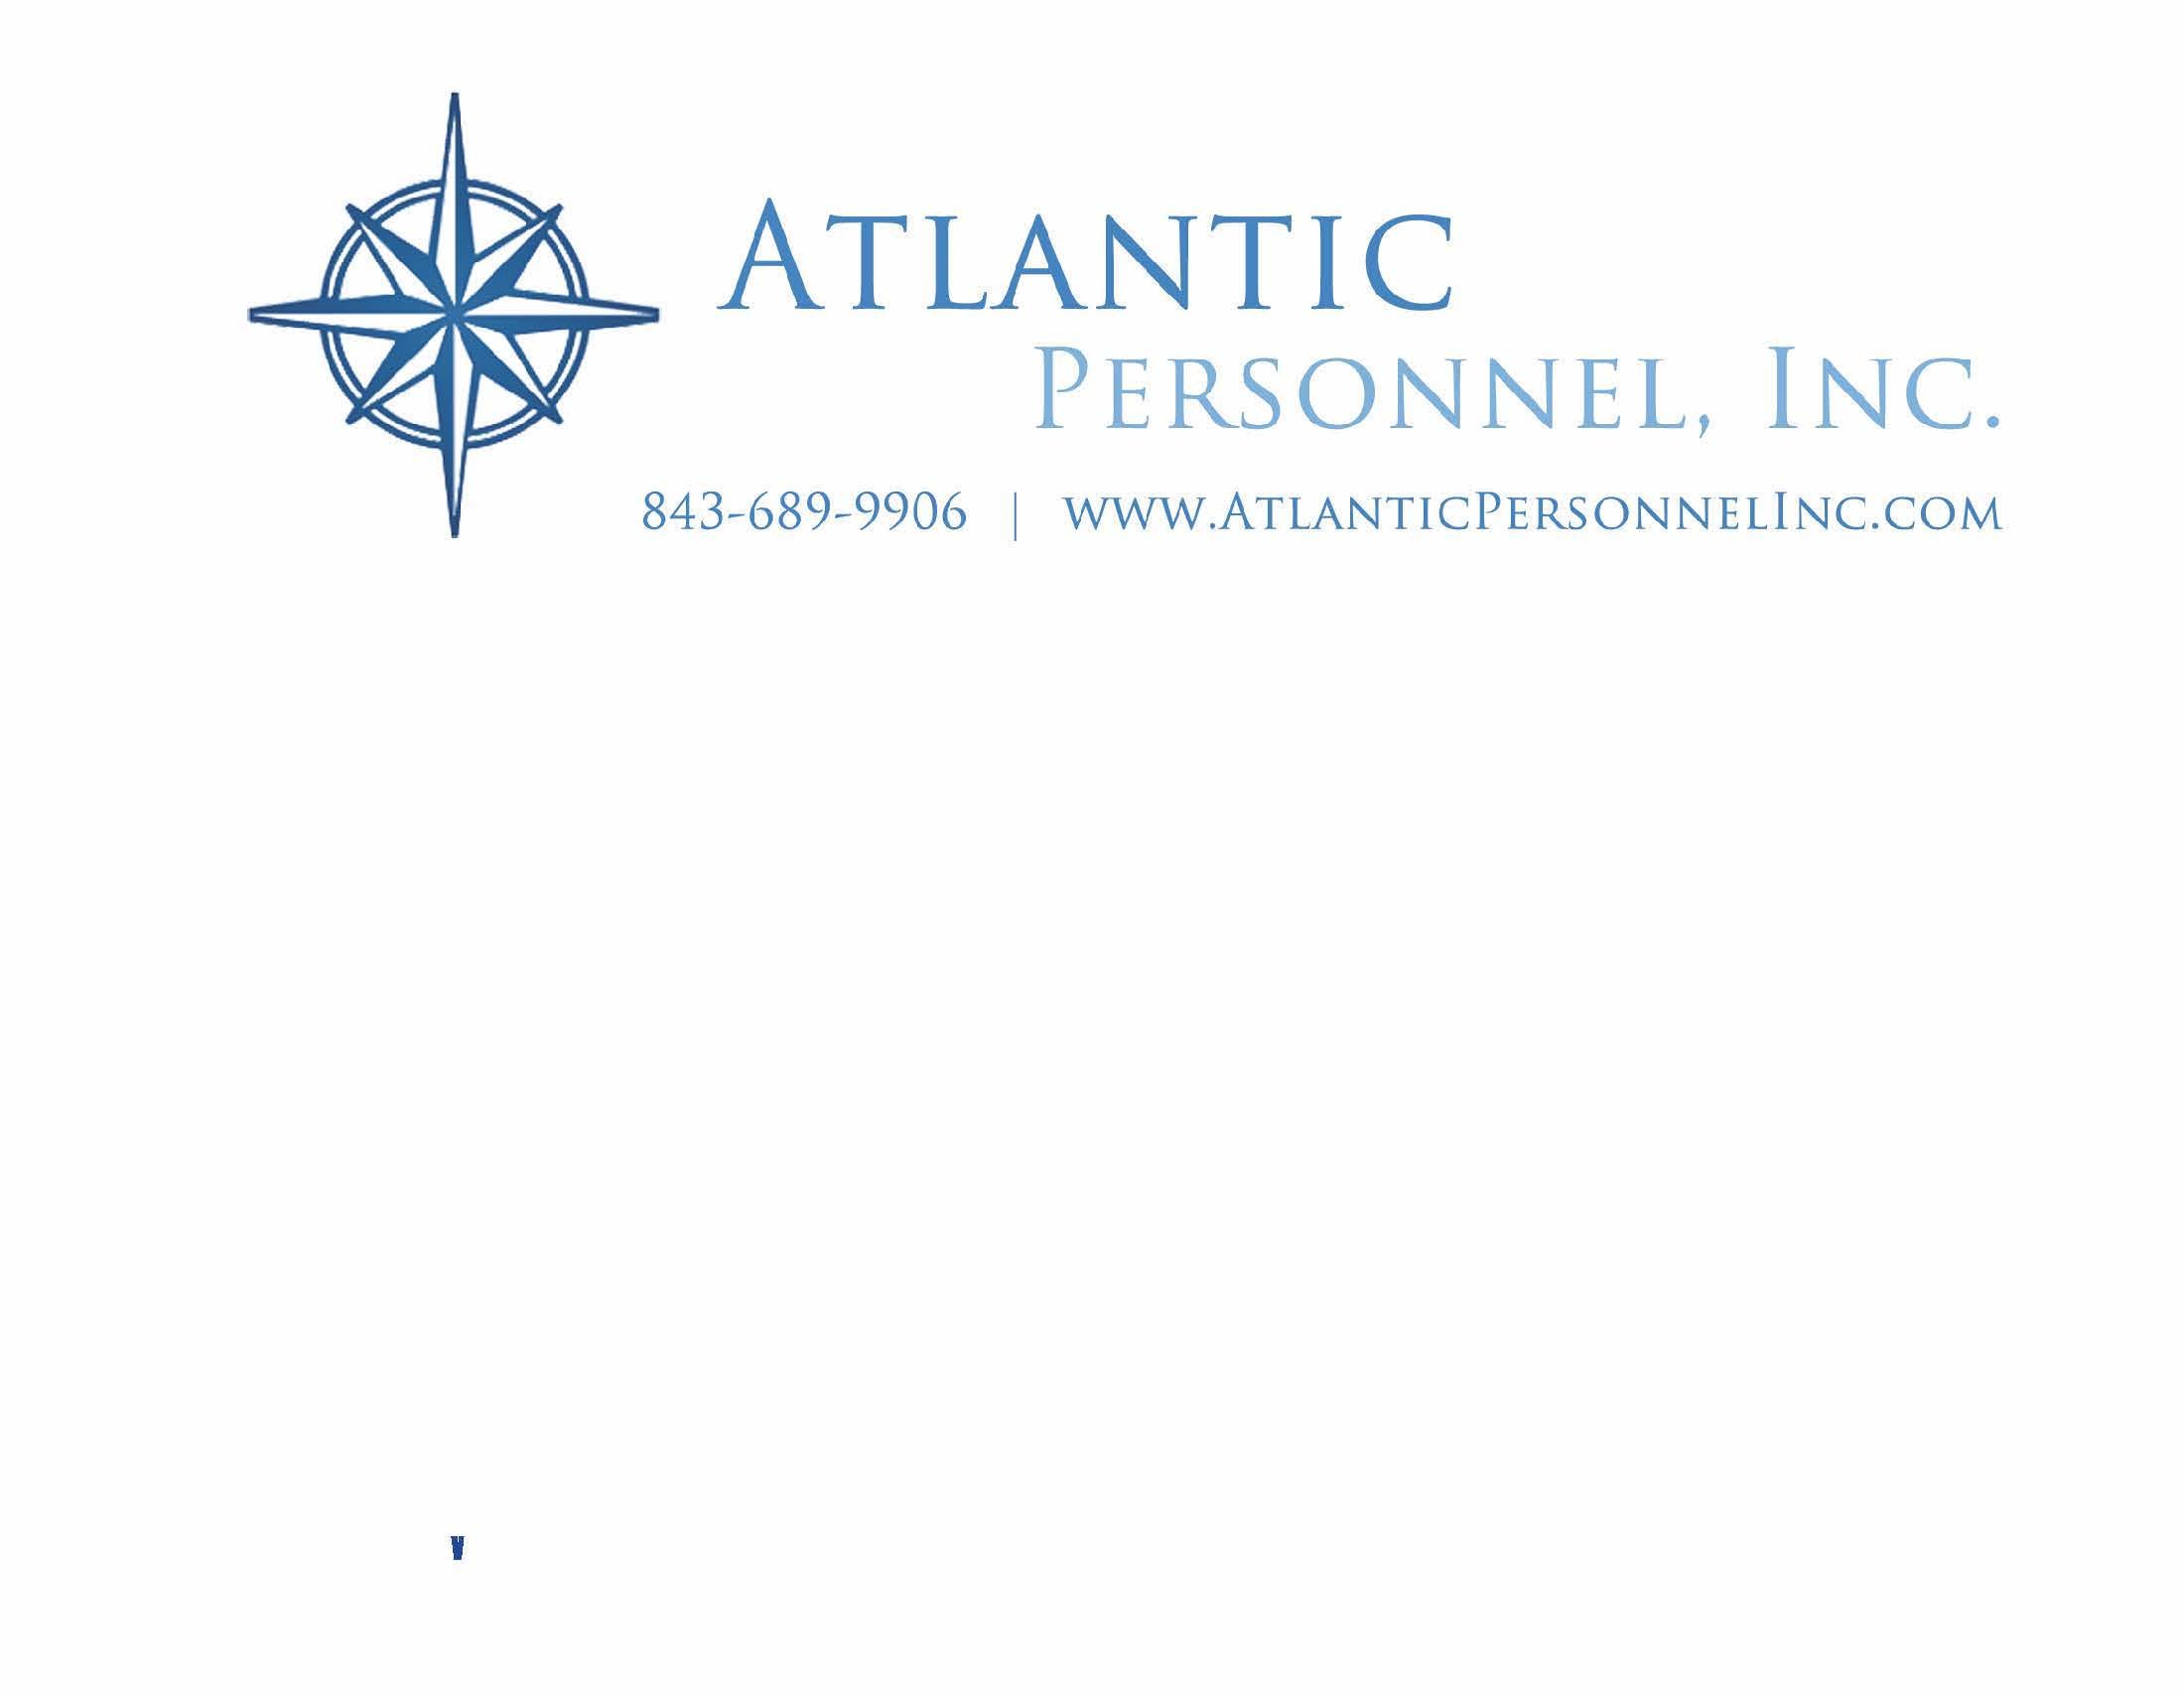 atlantic personnel logo v3.jpg